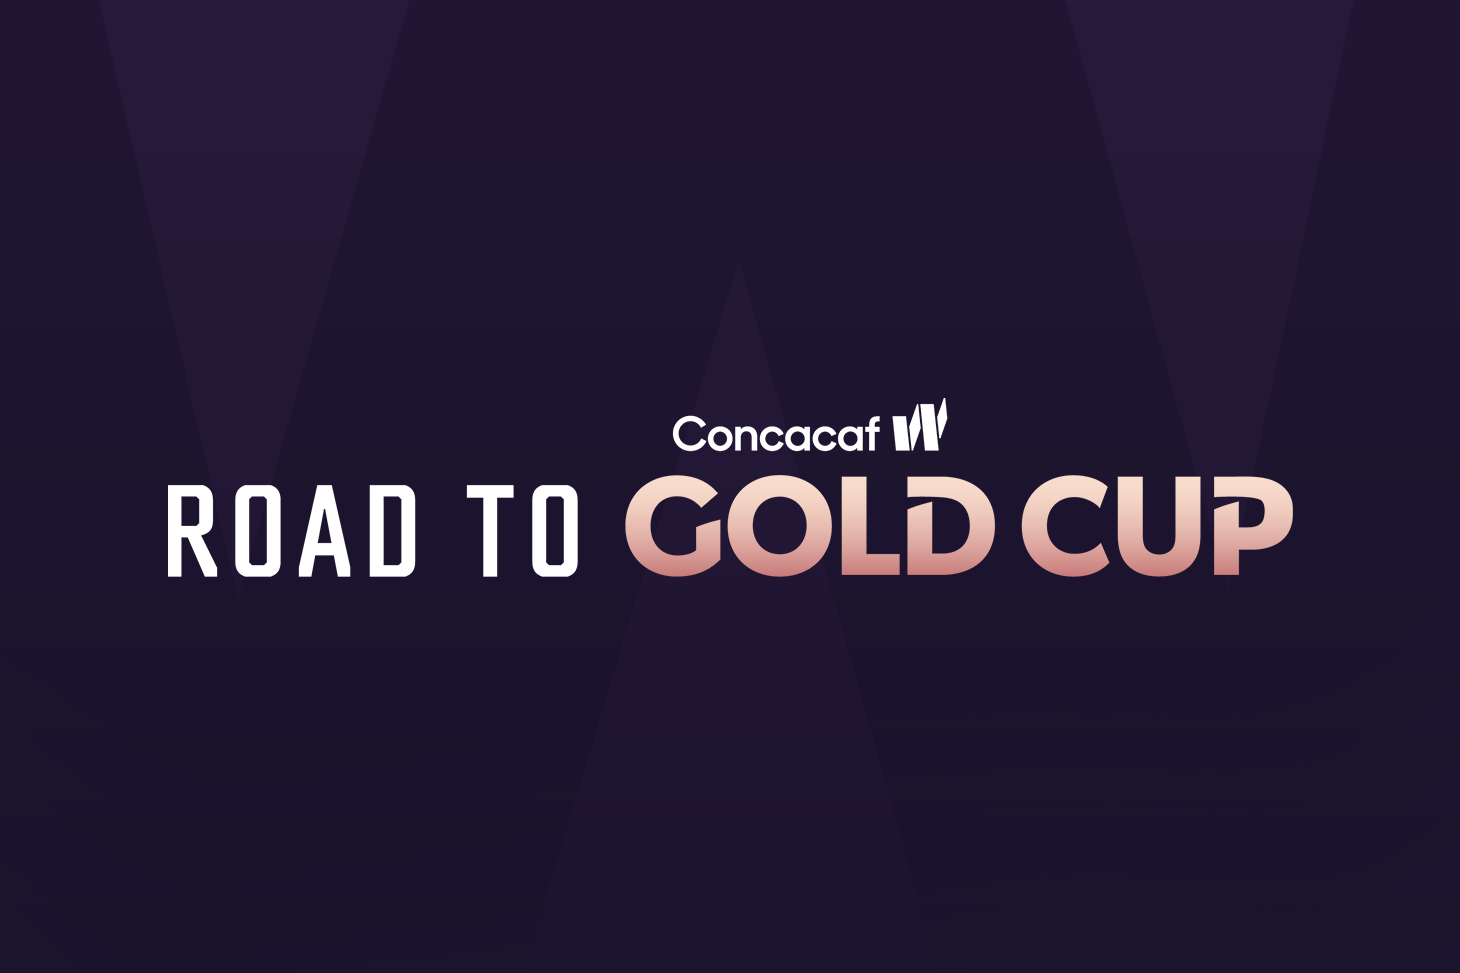 Concacaf confirma detalles de Road to W Gold Cup 2023